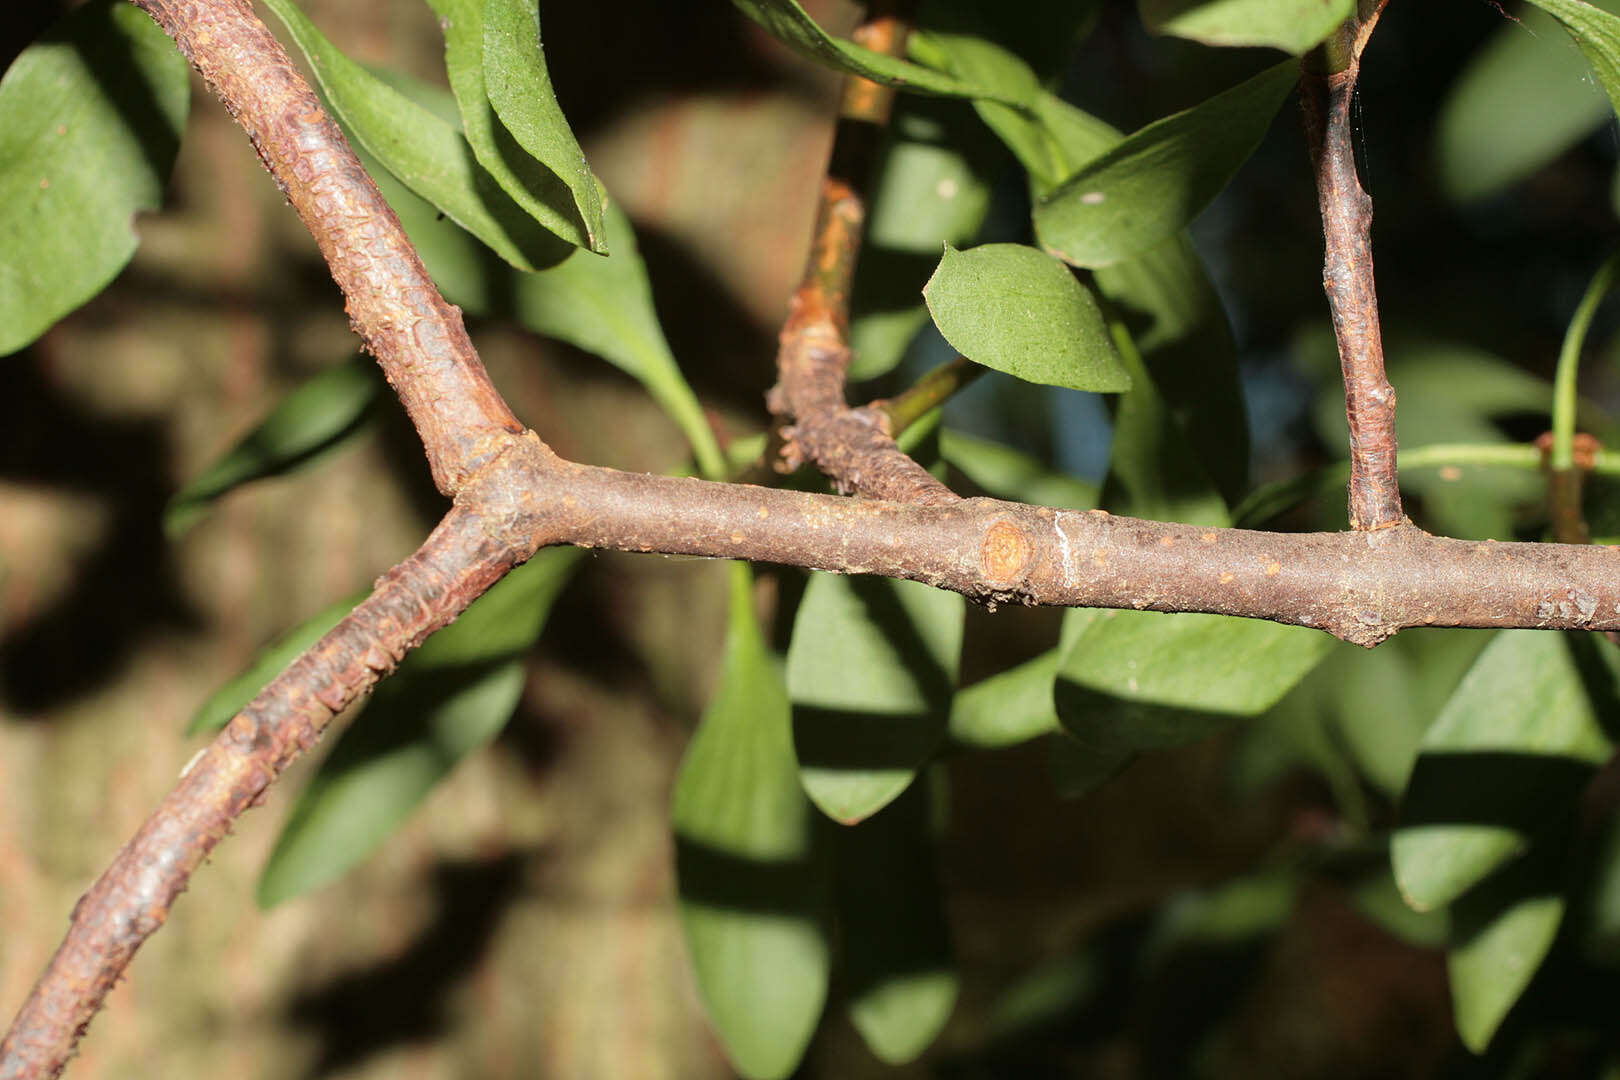 Image of Loranthus europaeus Jacq.